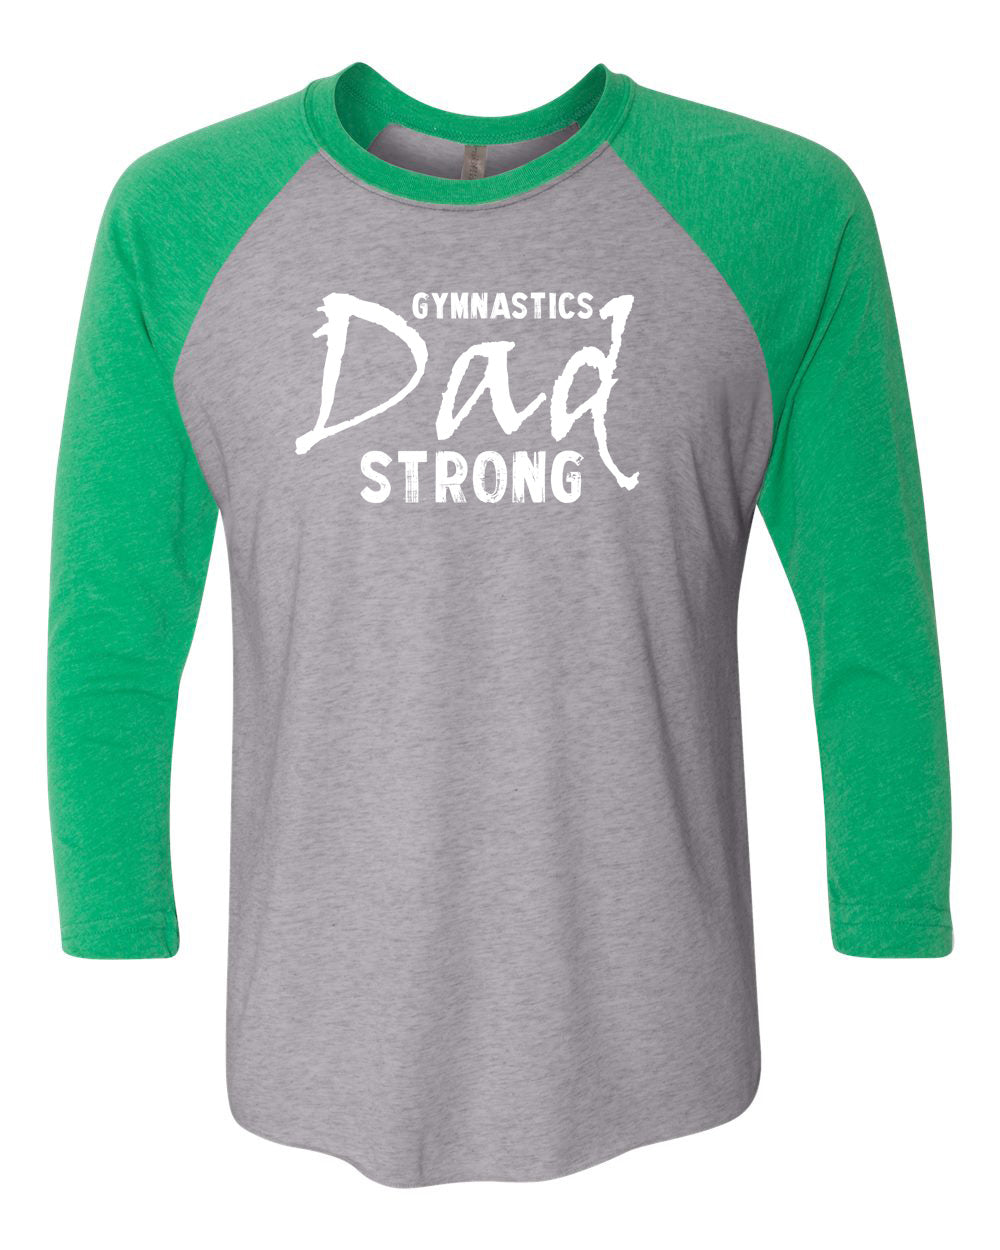 Gymnastics Dad Strong Adult Raglan Green